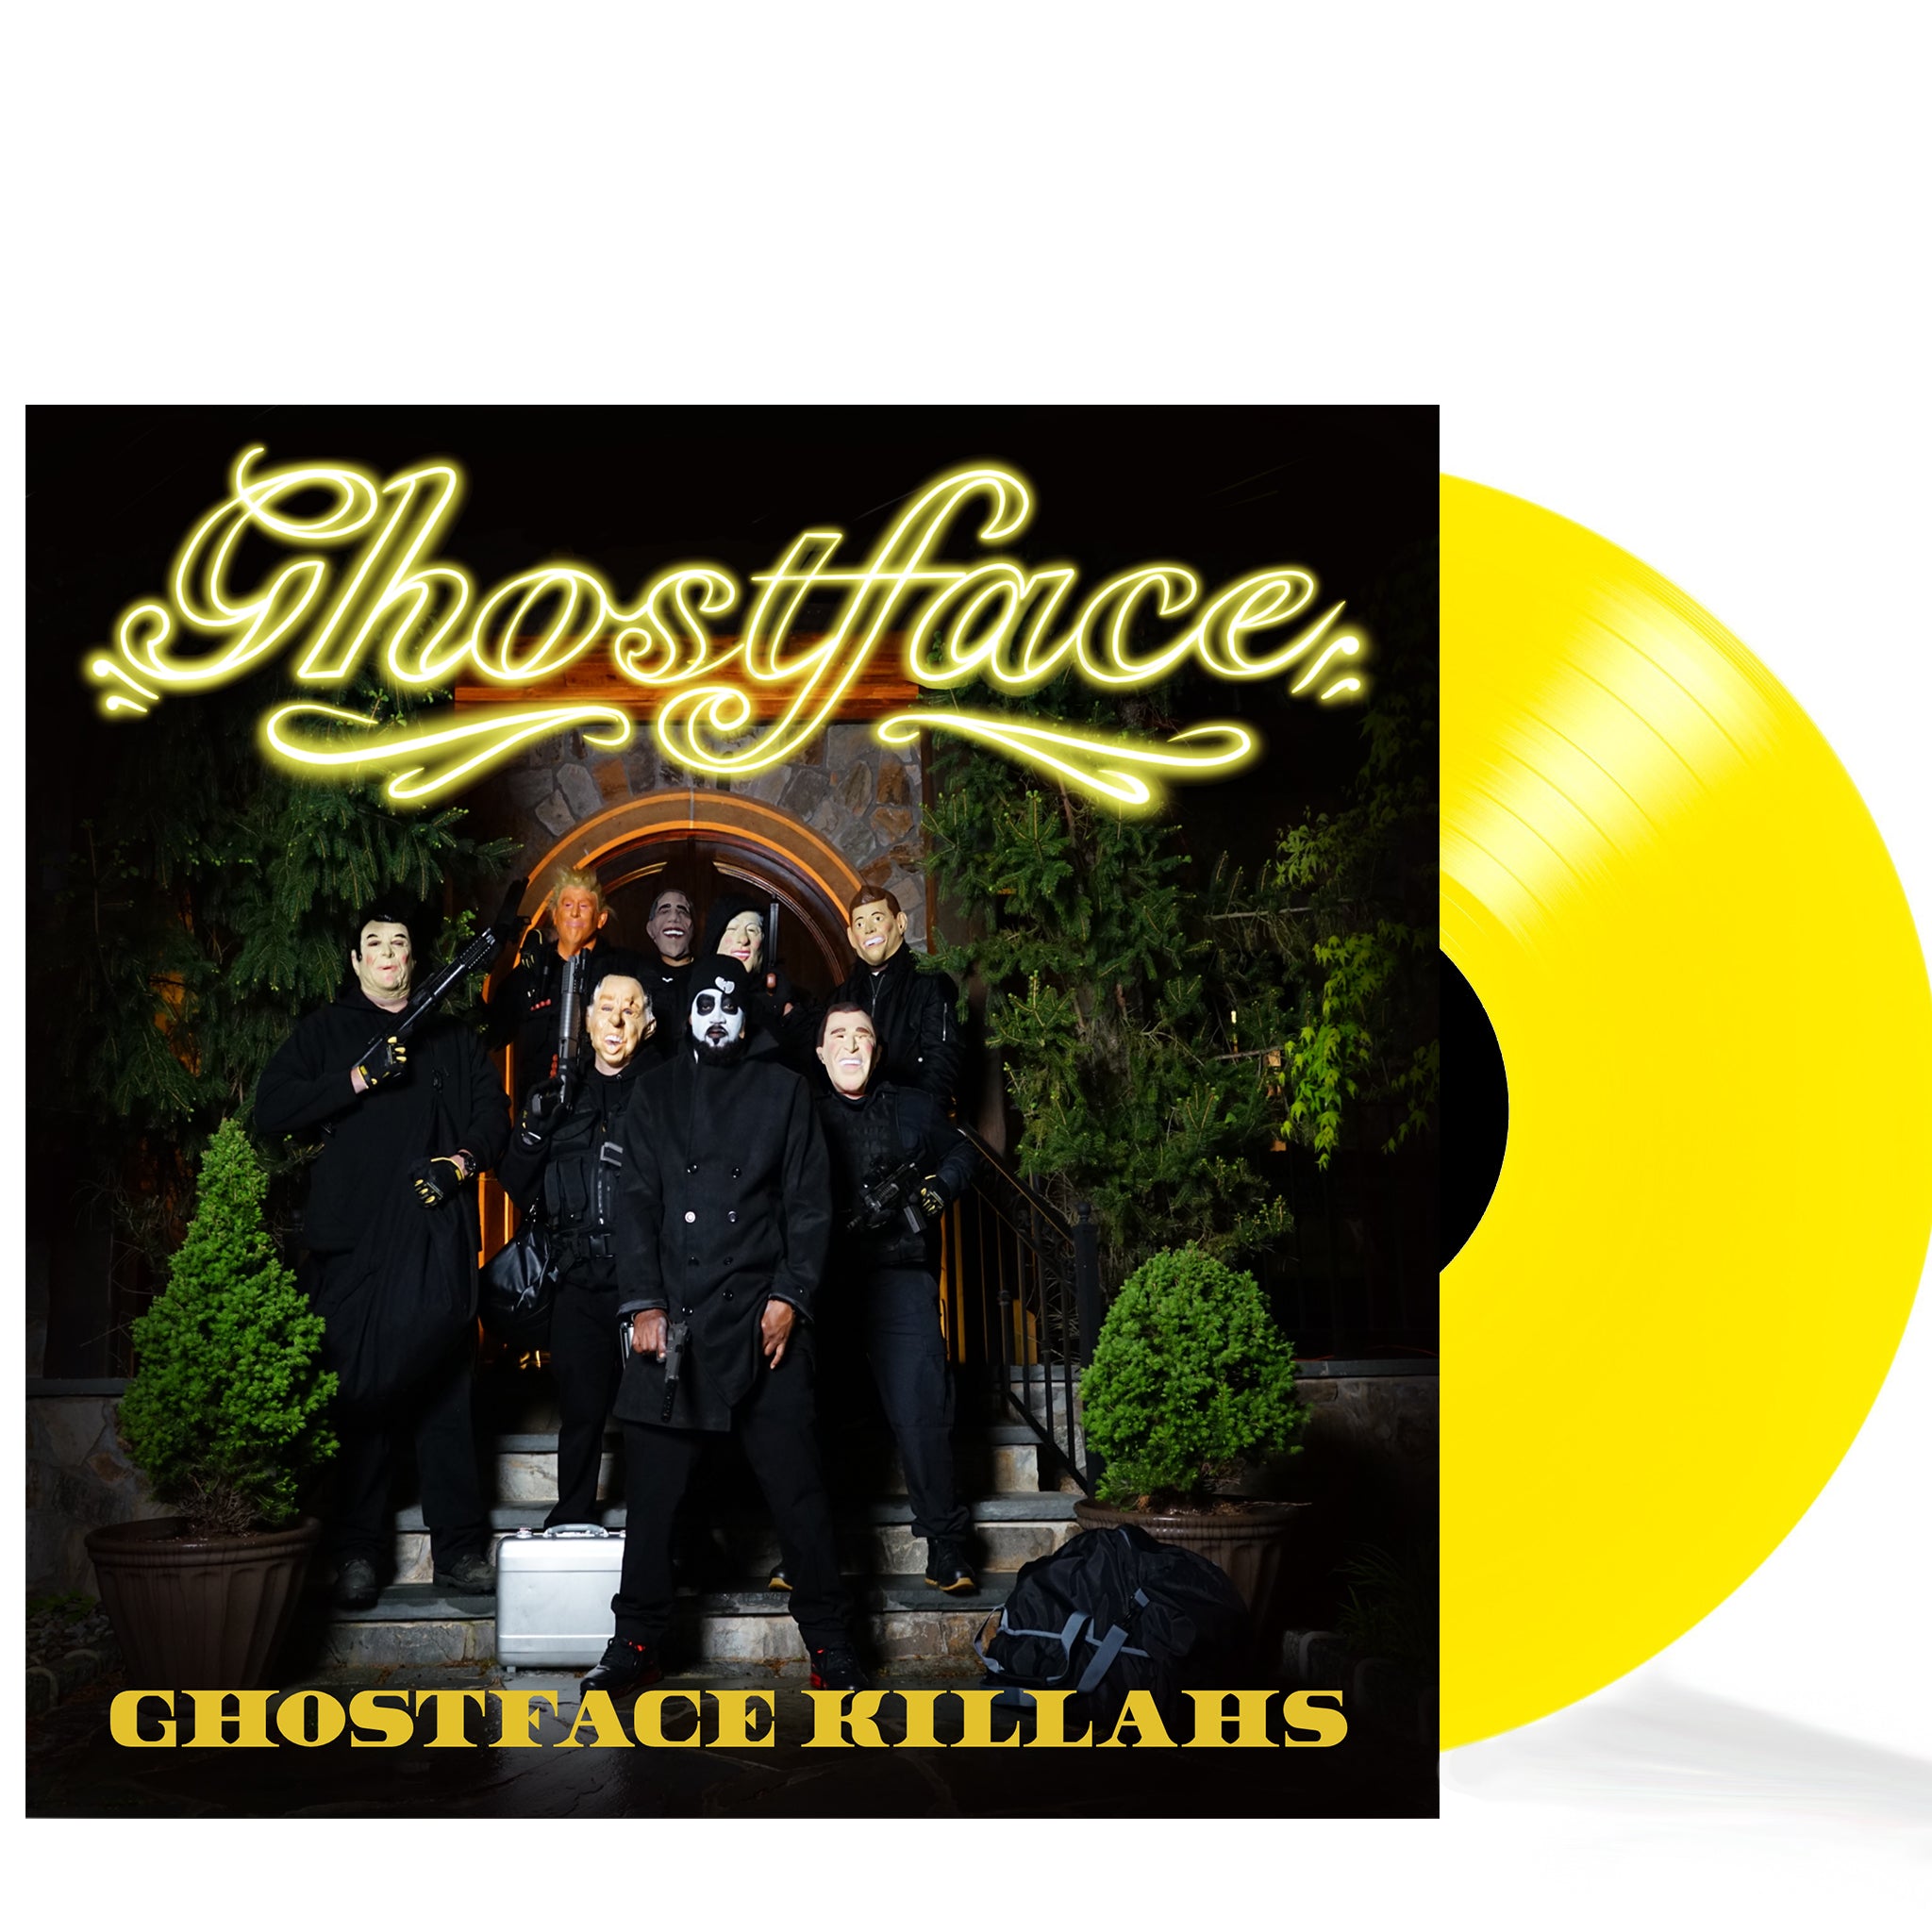 Ghostface Killahs VINYL